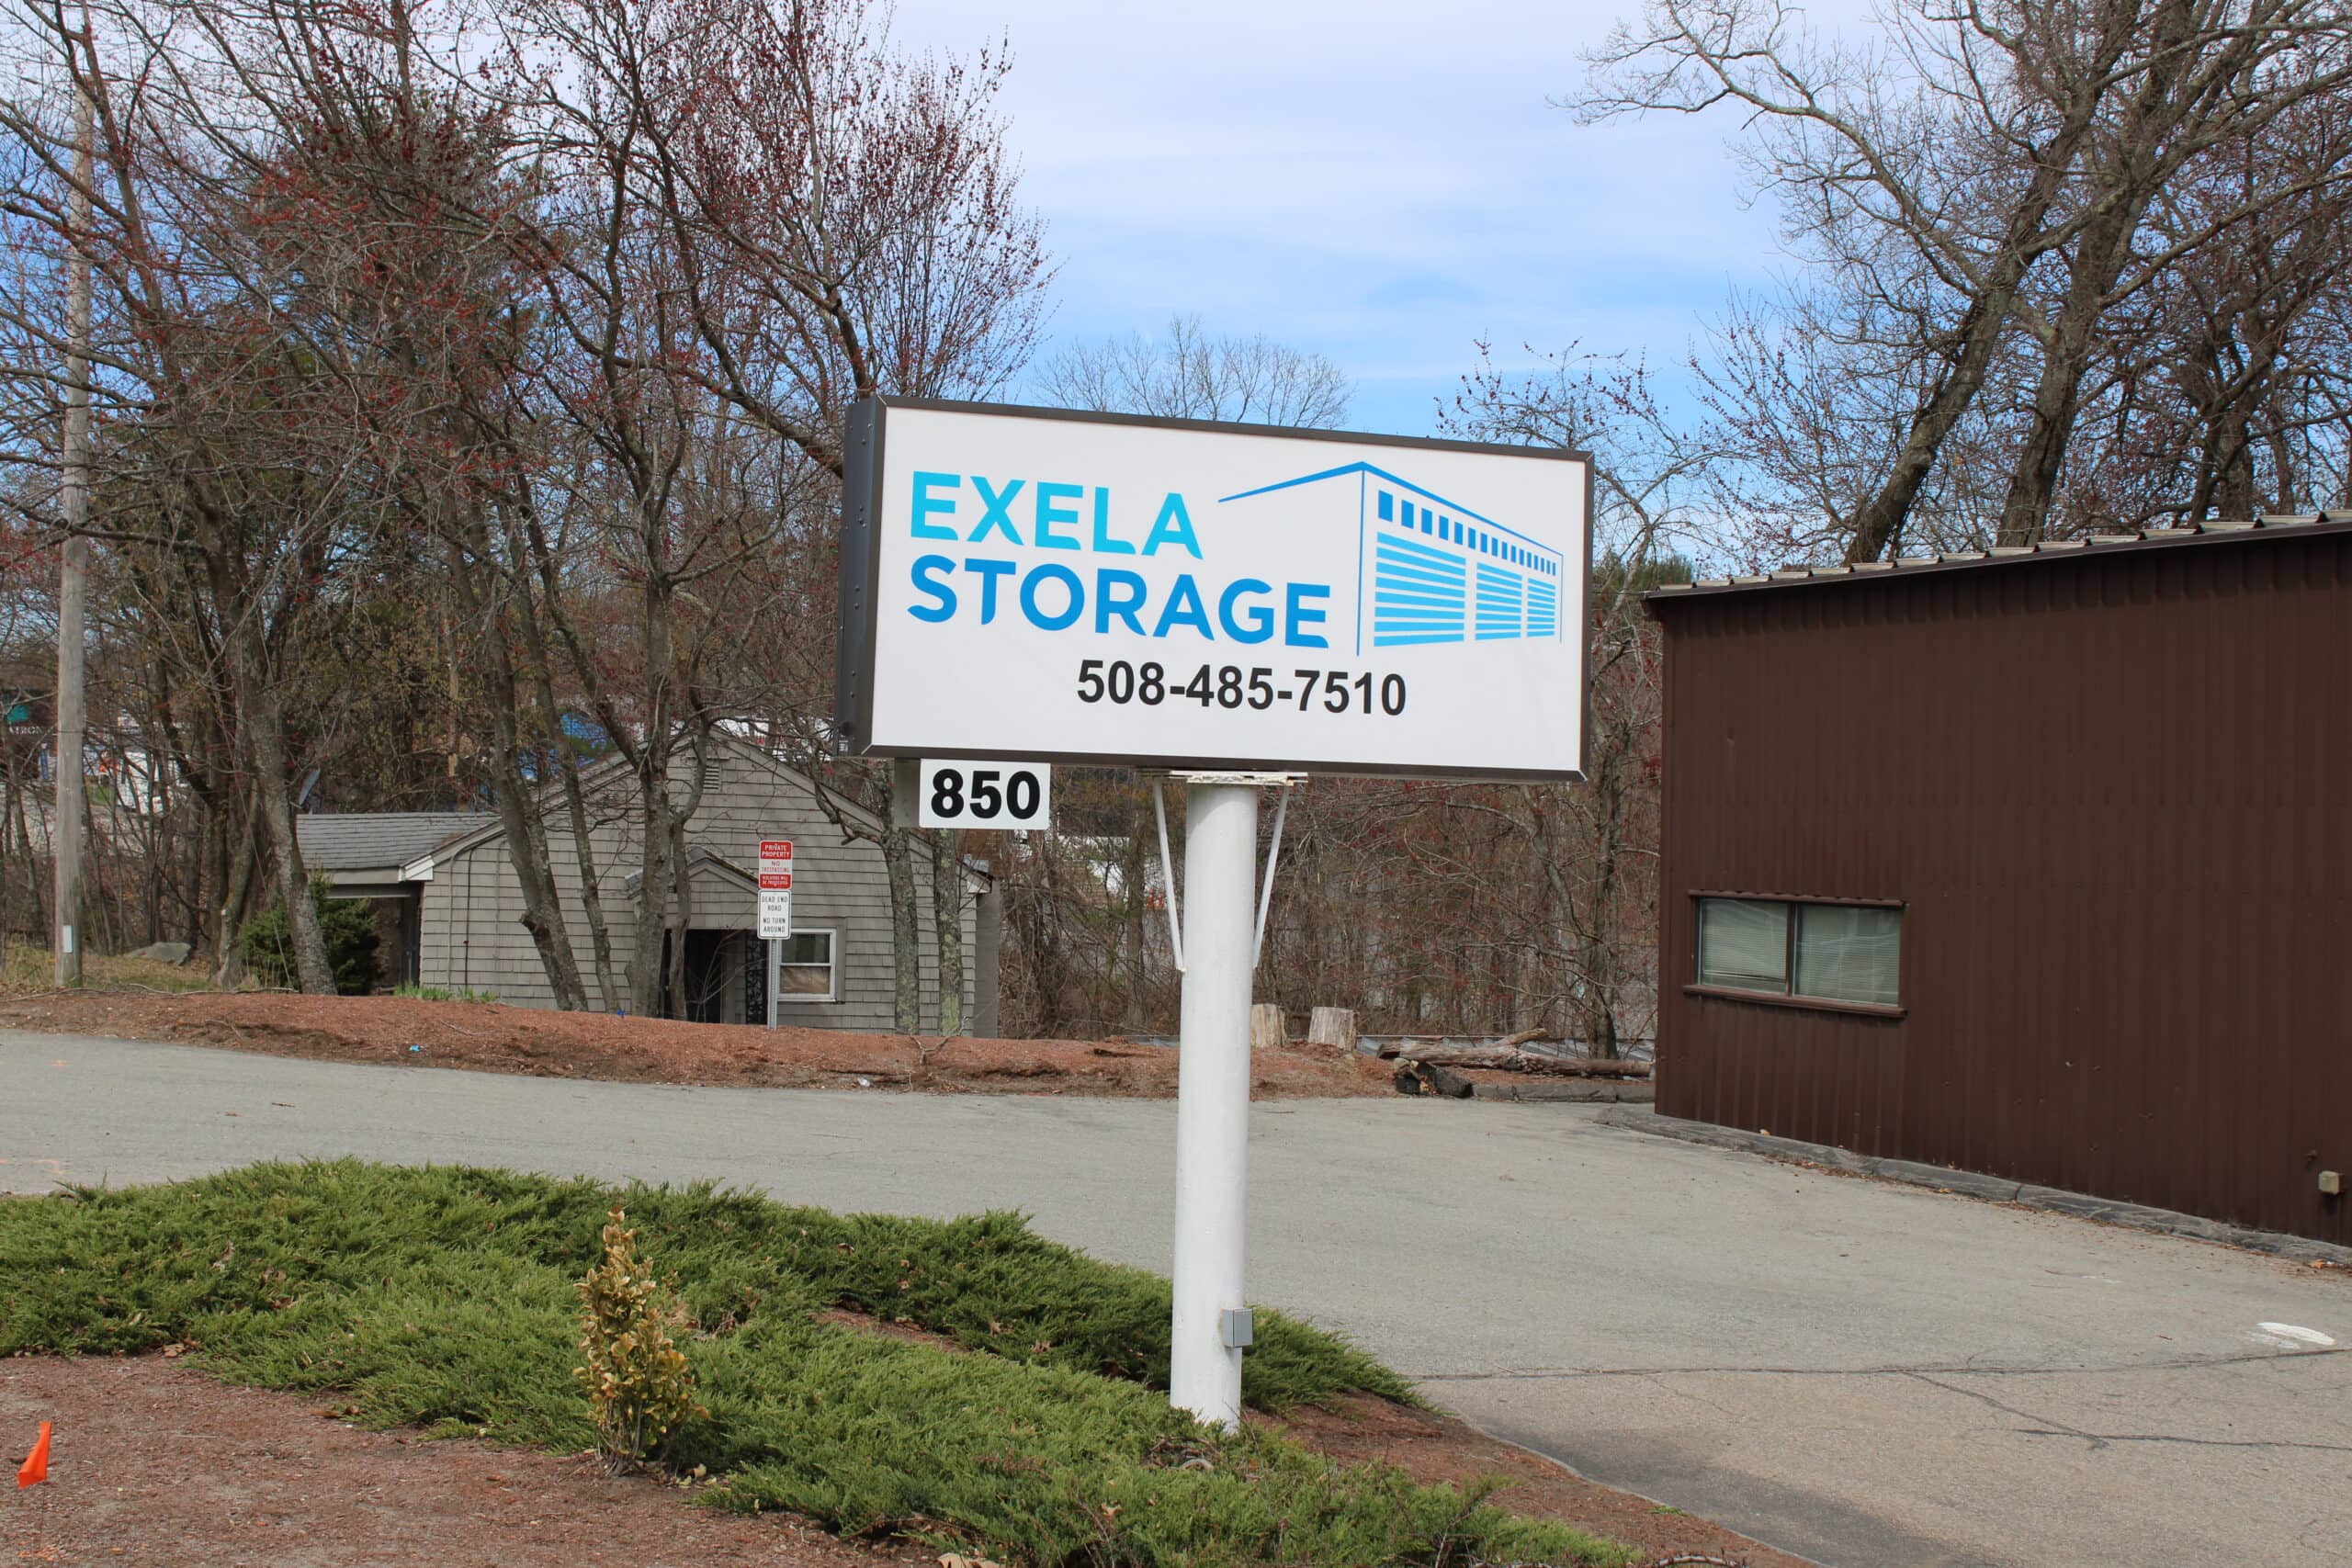 Exela Storage seeks to expand facility in Marlborough